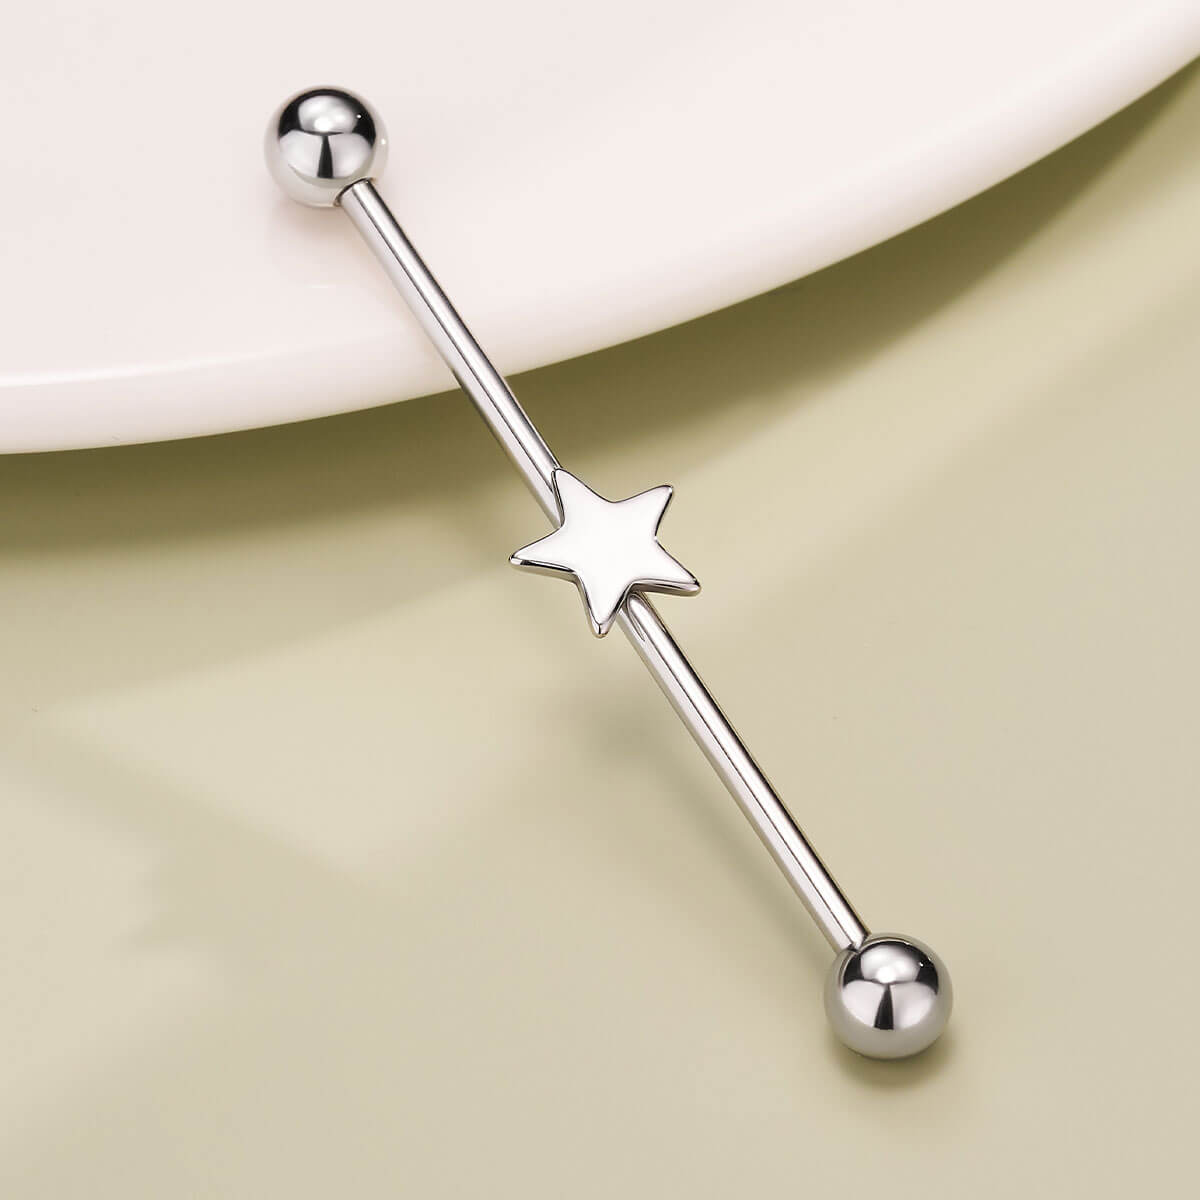 14g star industrial piercing